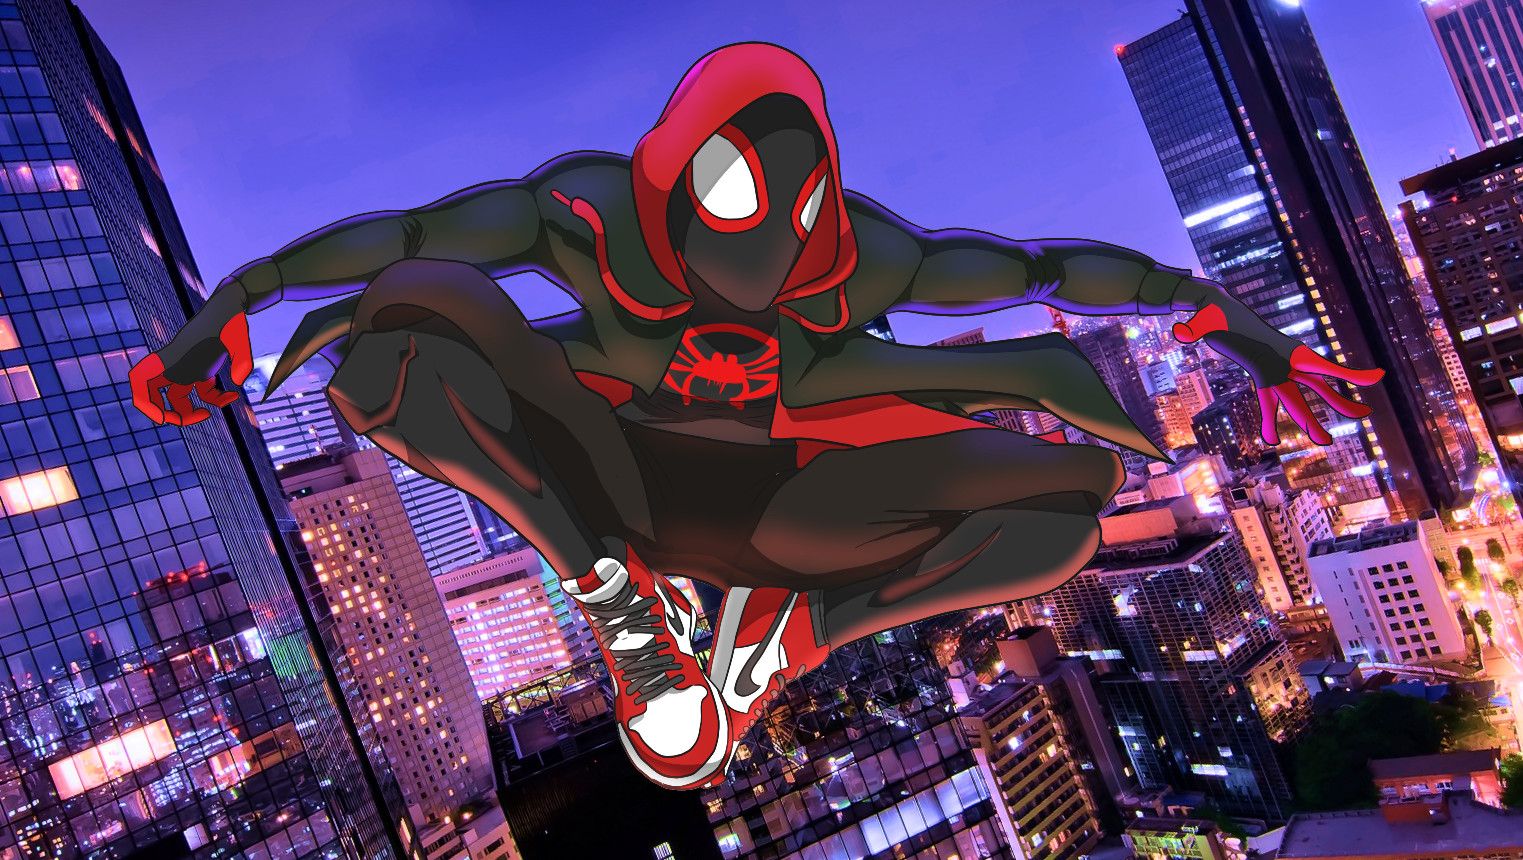 Spider-Man Themed Air Jordans Being 